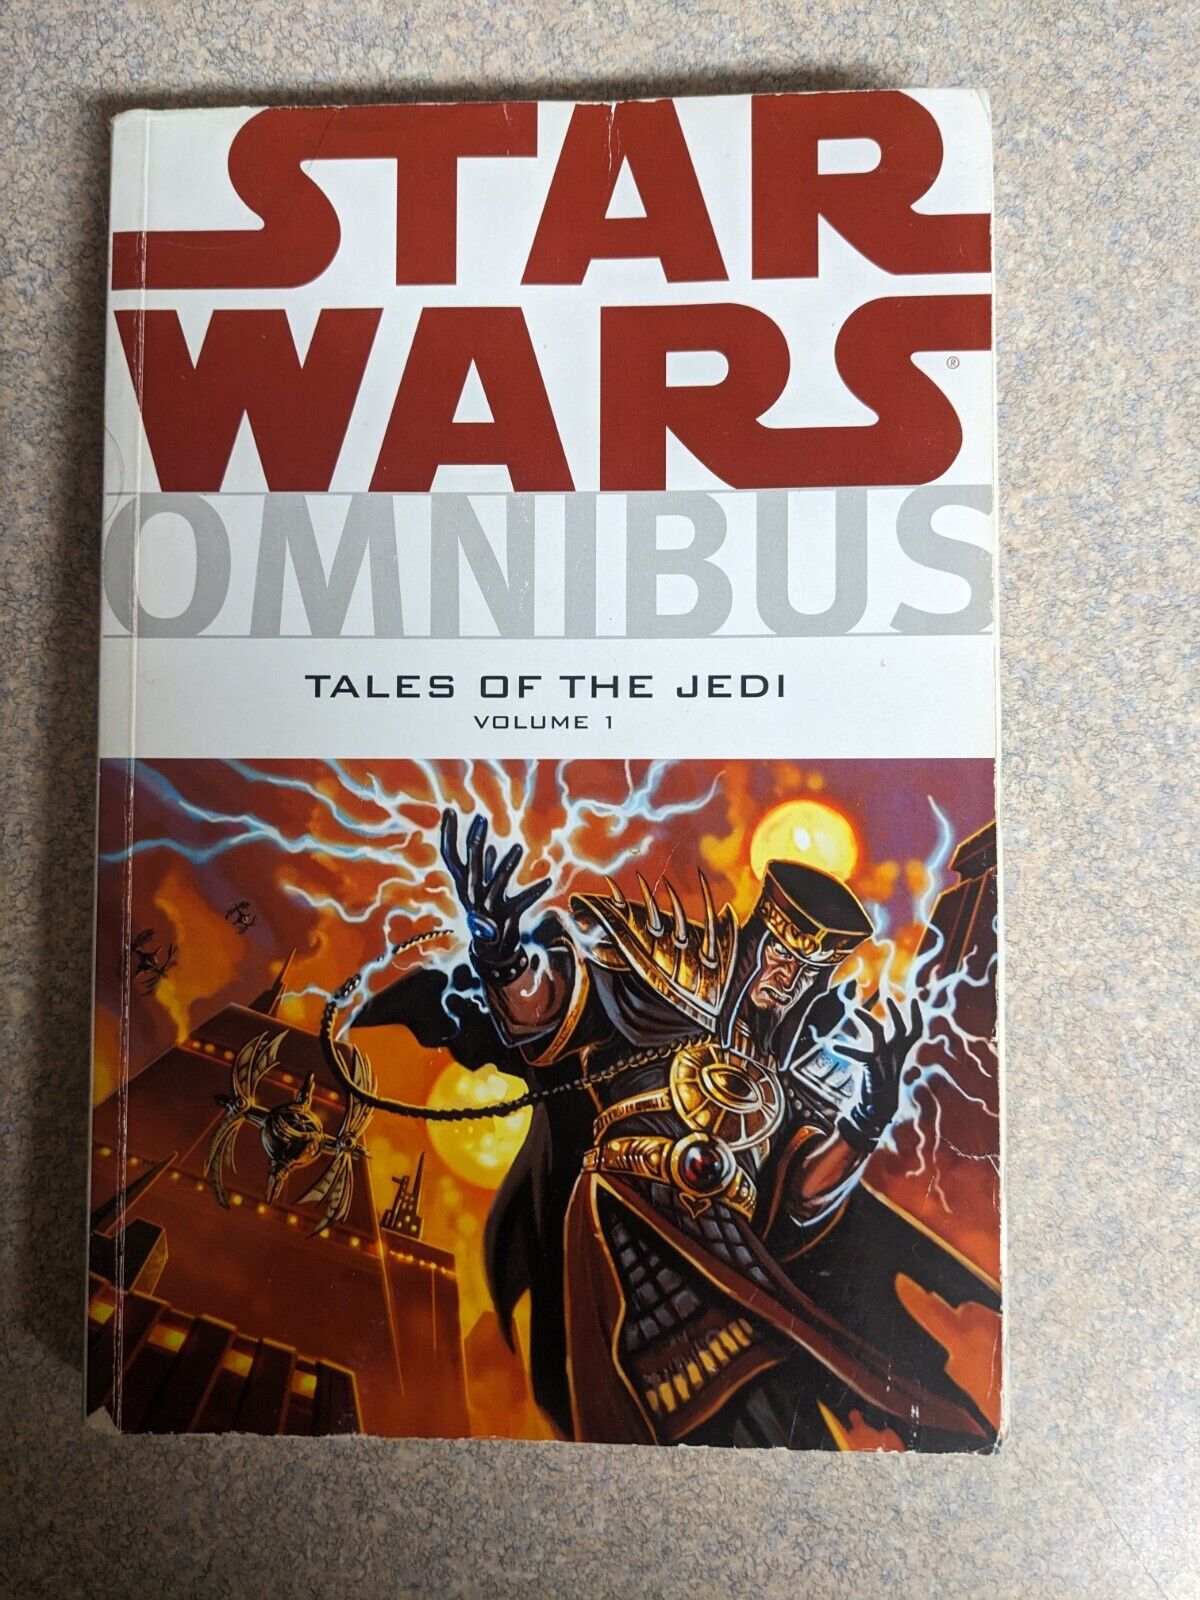 Star Wars Omnibus: Tales of the Jedi #1 (Dark Horse Comics, November 2007)